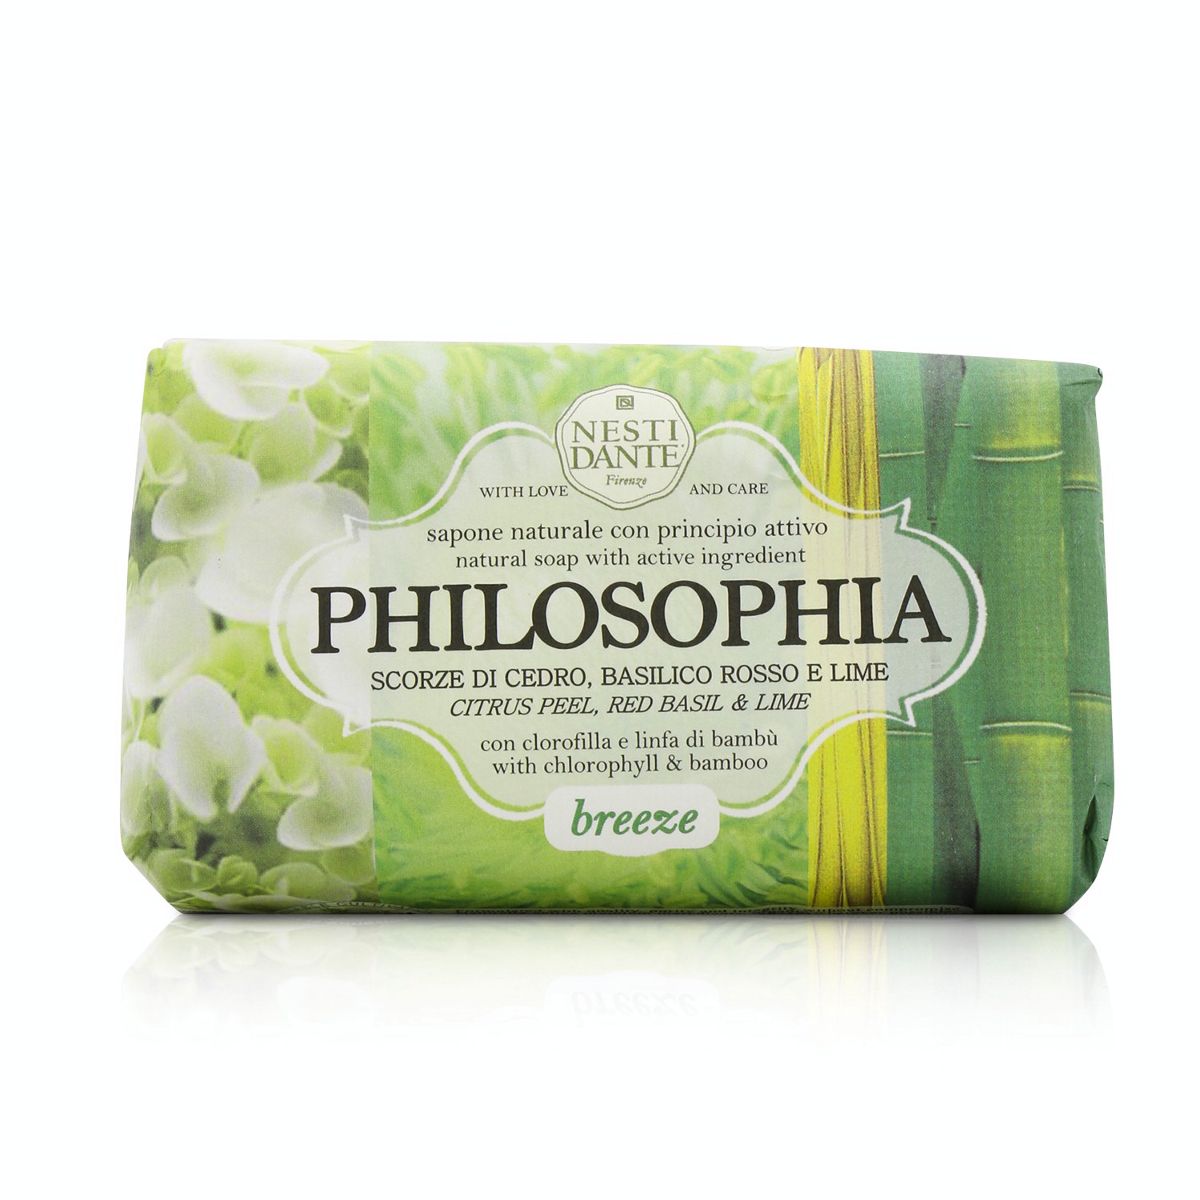 Philosophia Natural Soap - Breeze - Citrus Peel Red Basil  Lime With Chlorophyll  Bamboo Nesti Dante Image